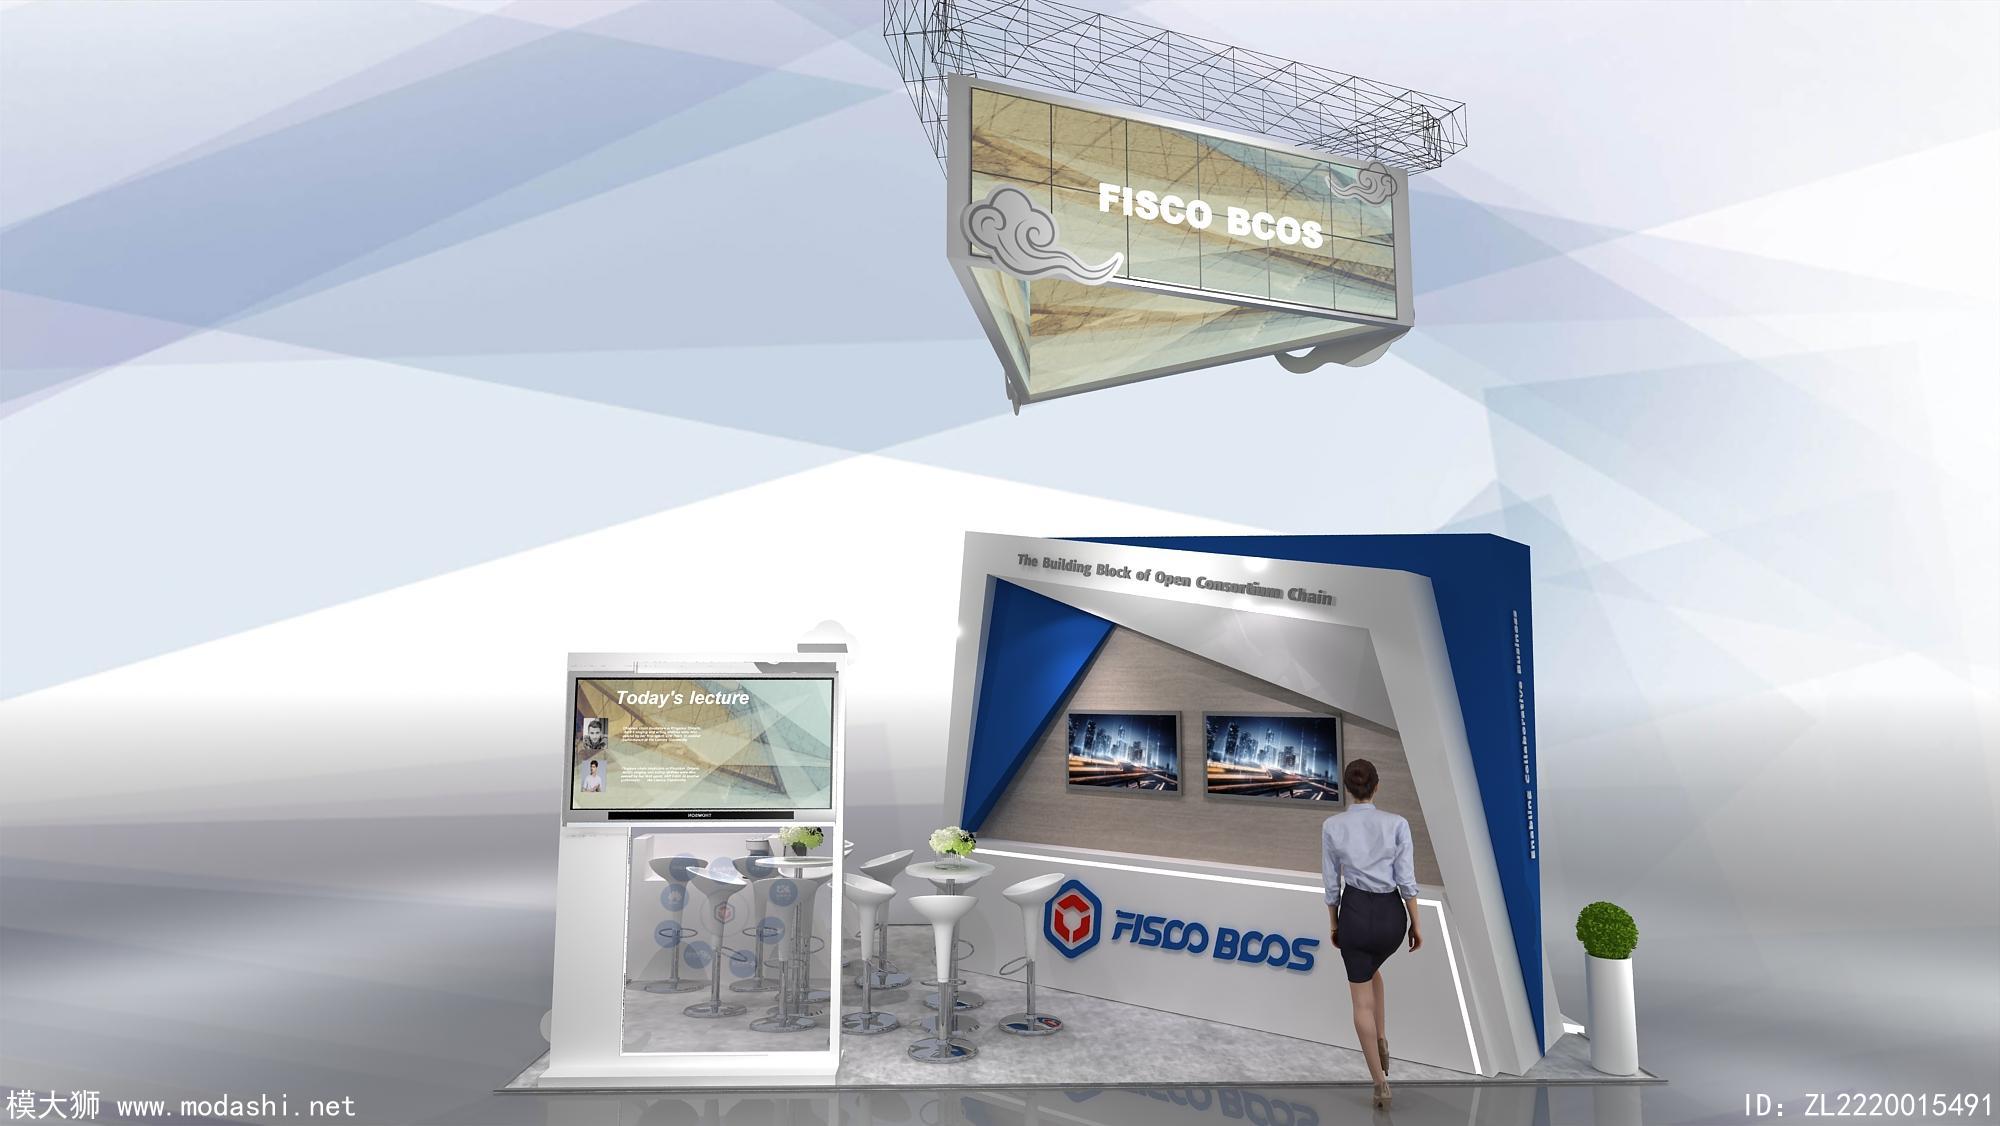 FISCOBCOS展台模型